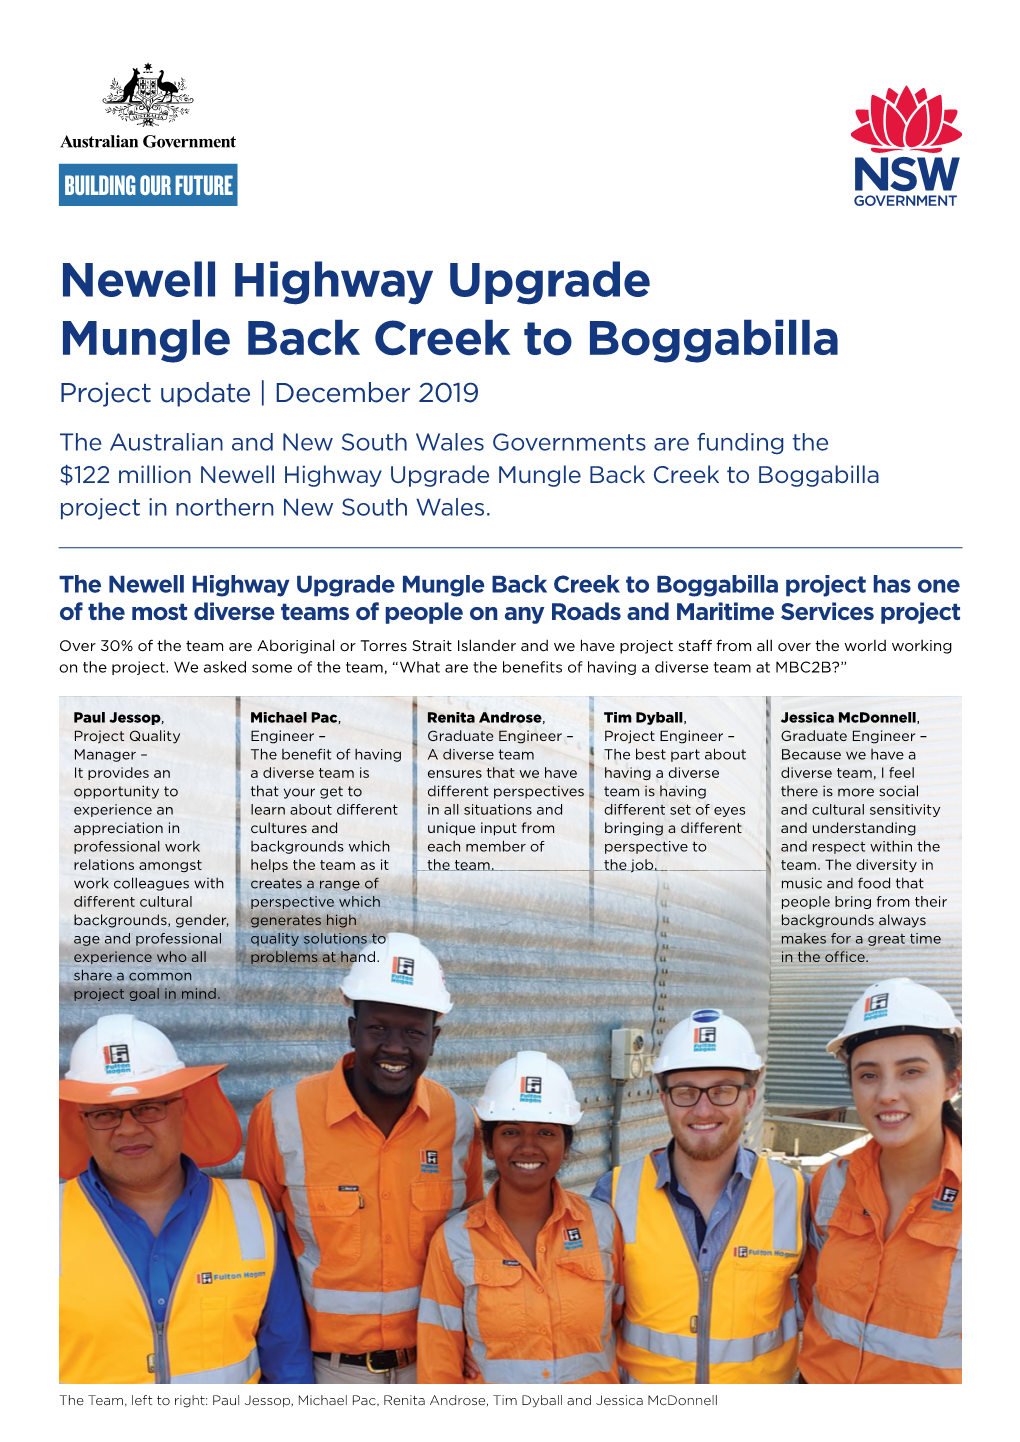 Newell Highway Upgrade Munge Back Creek to Boggabilla